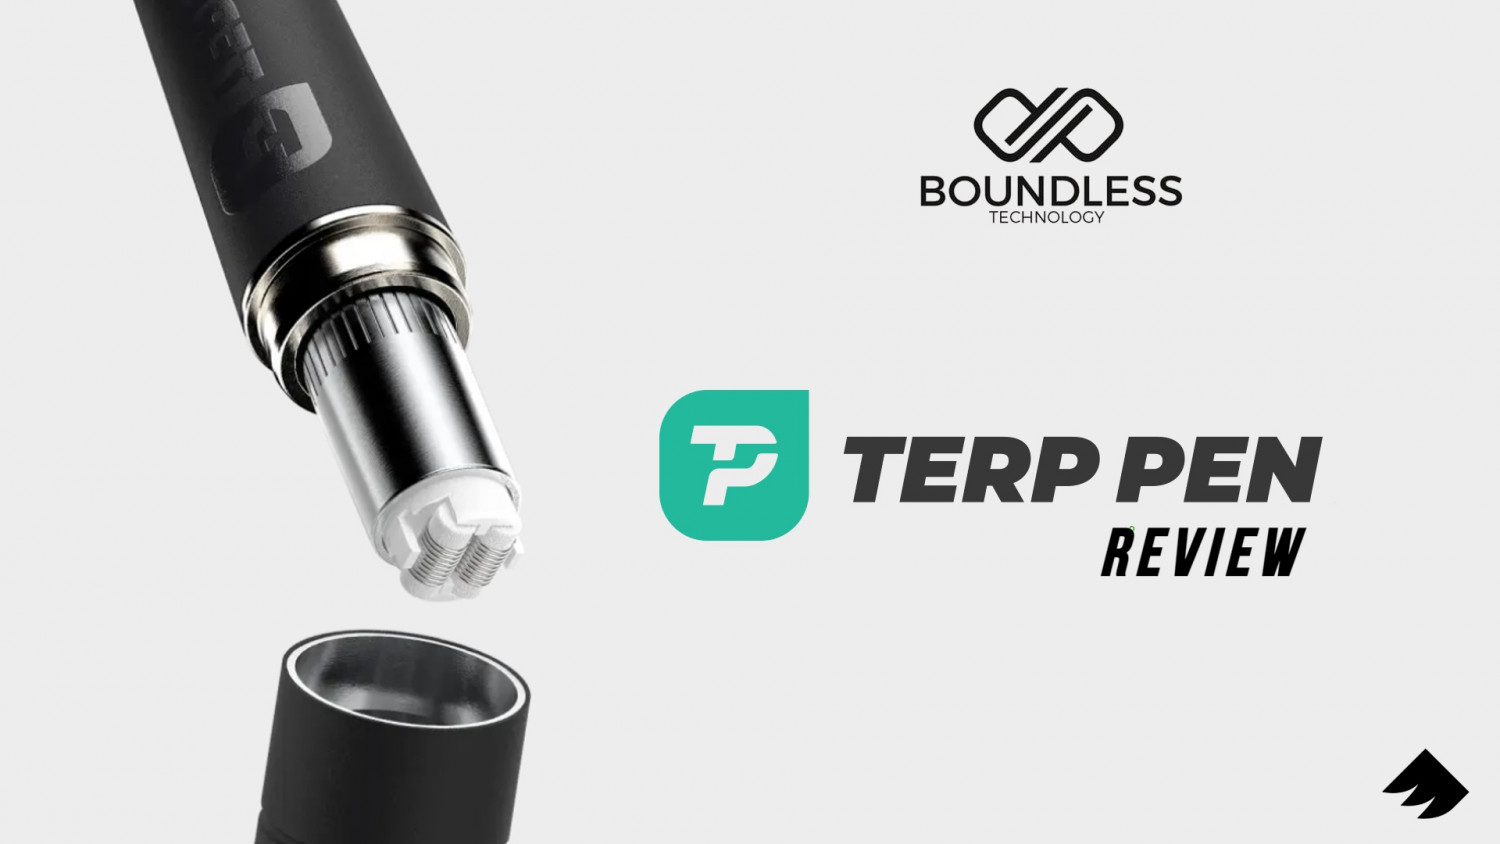 Boundless Terp Pen - Boundless Tech